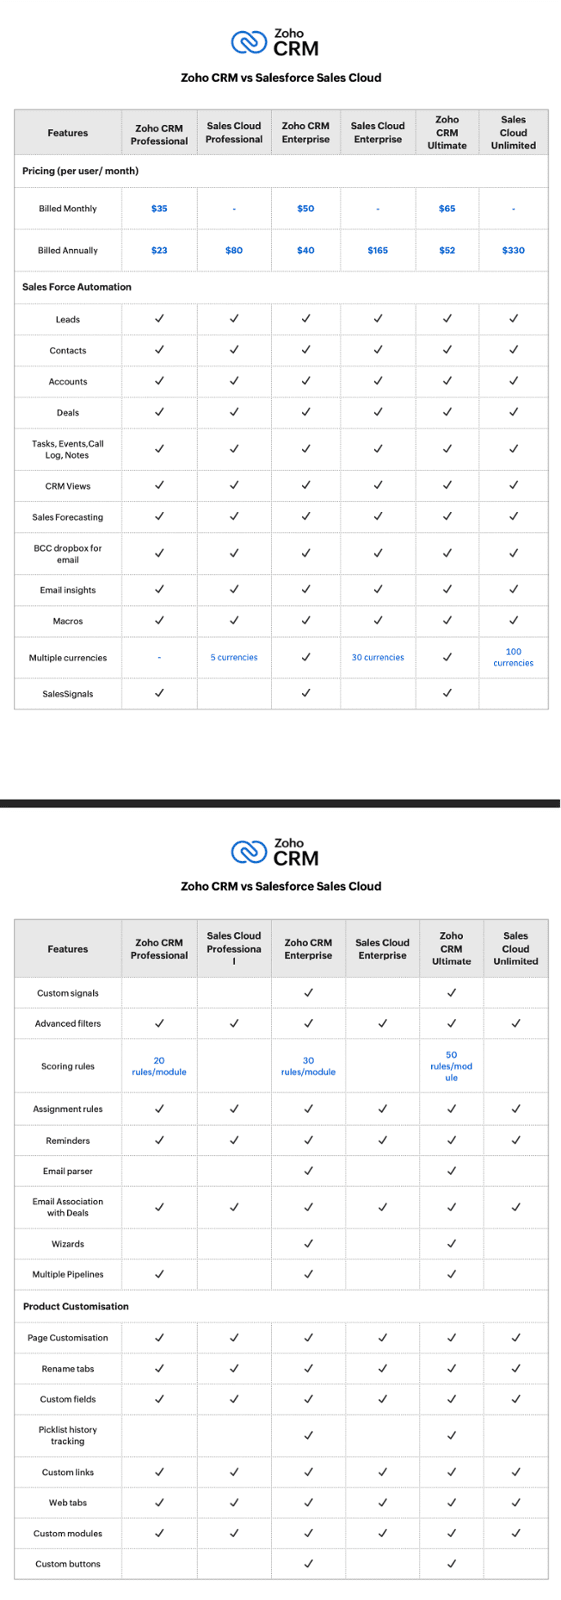 Zoho CRM vs Salesforce: A Comprehensive Comparison